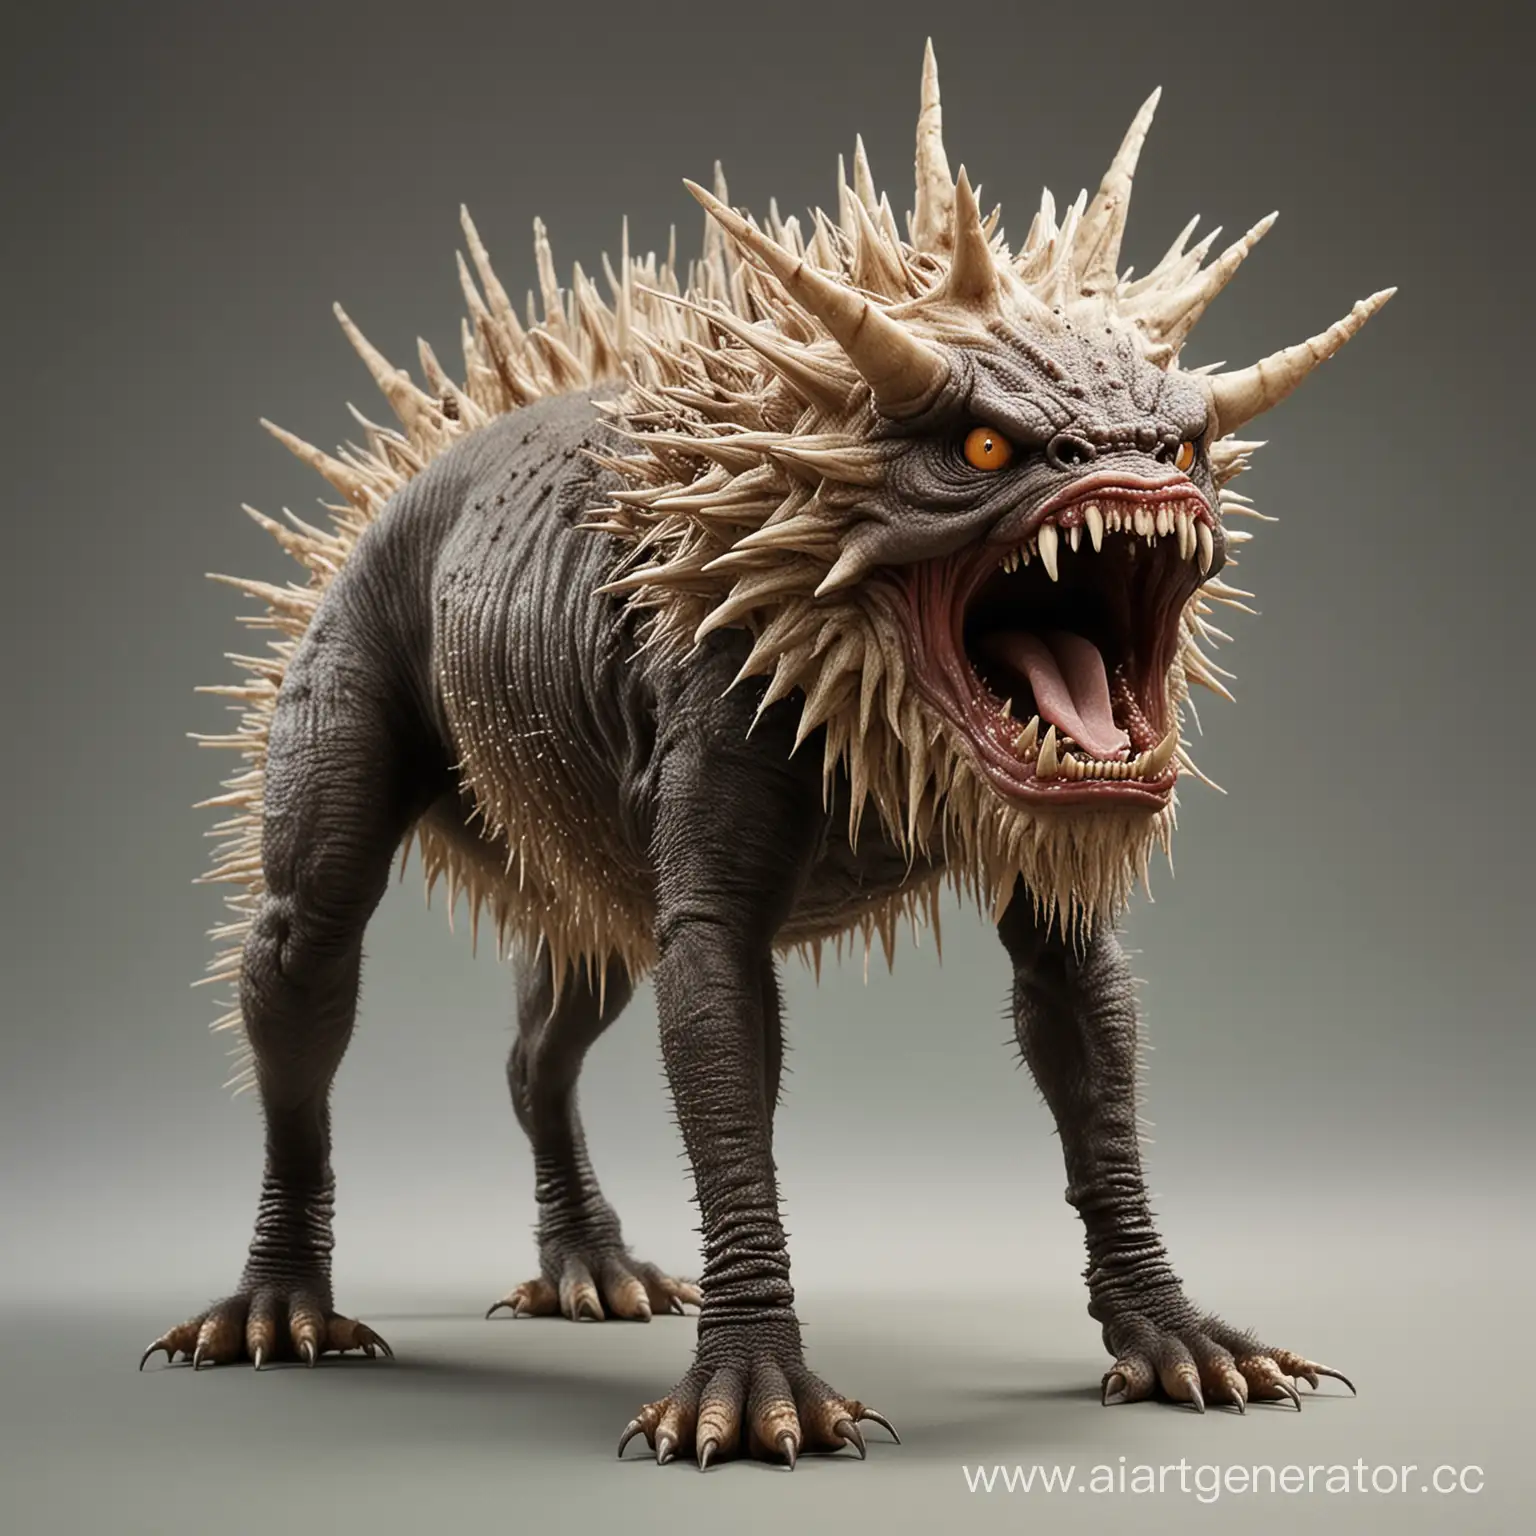 Spiky-DogSized-Monster-with-Saliva